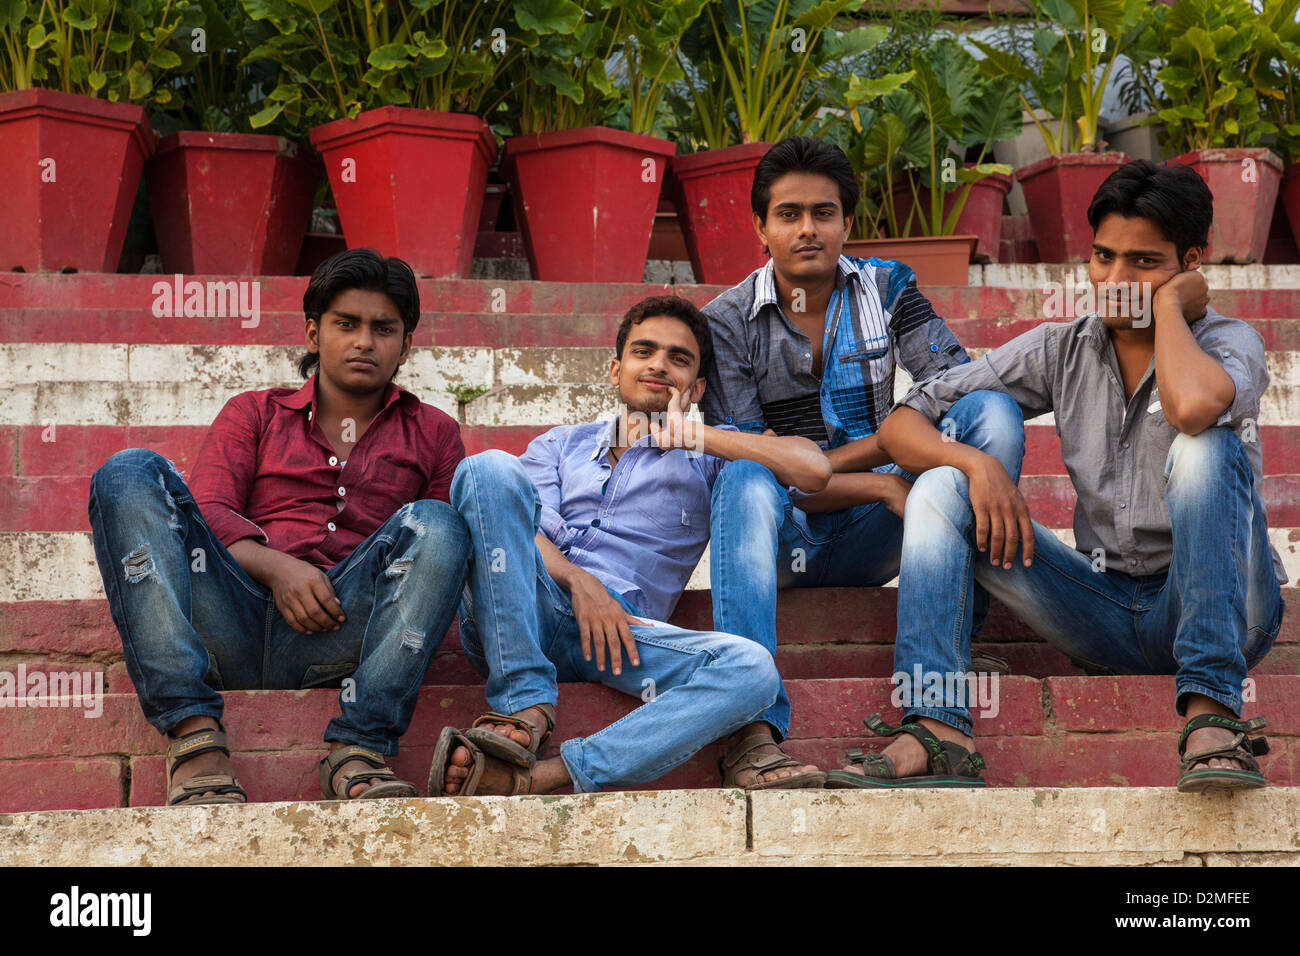 group-of-indian-men-posing-for-the-camera-varanasi-india-D2MFEE.jpg